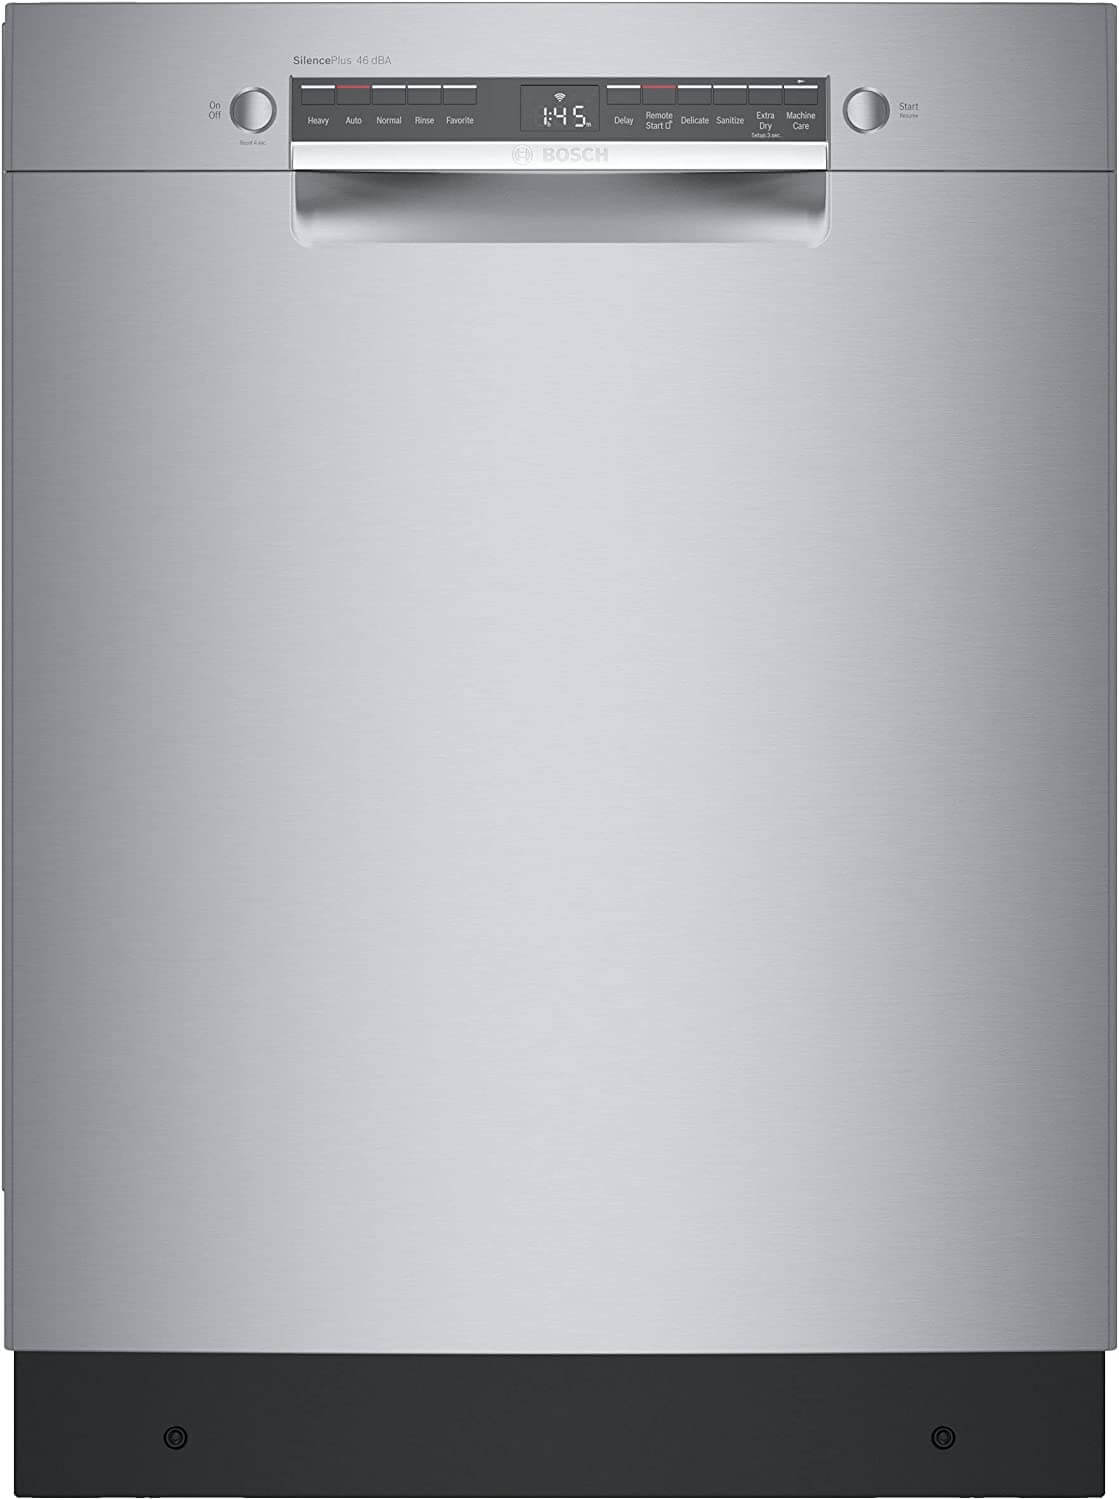 silver dishwasher unit